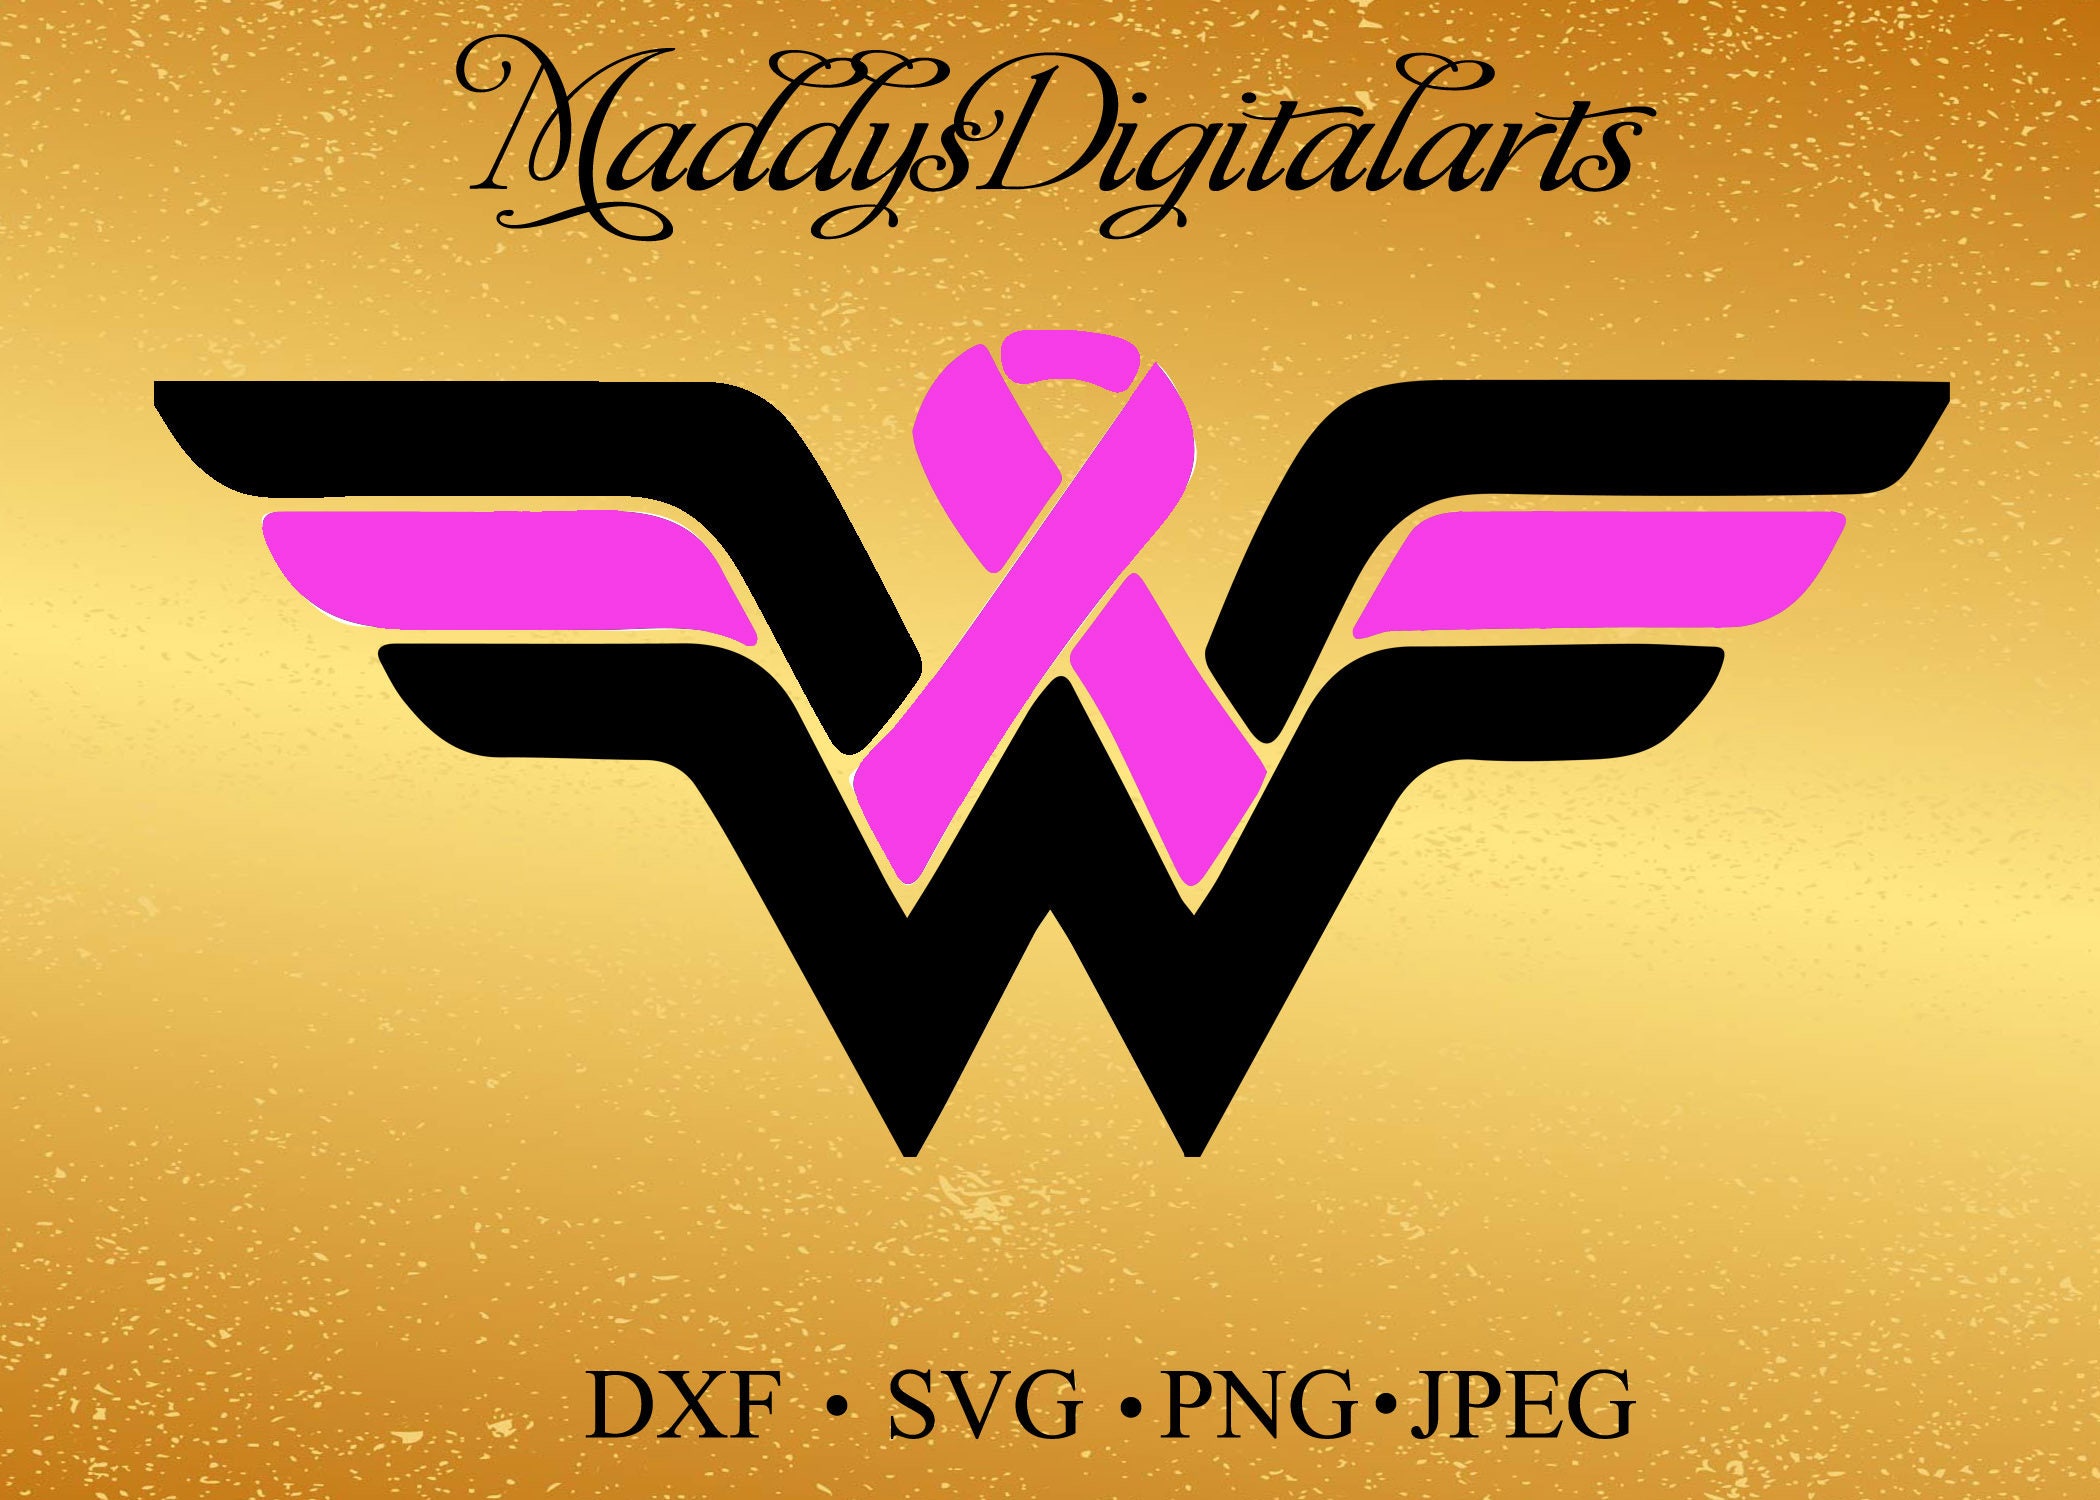 Download Wonder Woman Breast Cancer Awareness svgdxf cancer Ribbon.